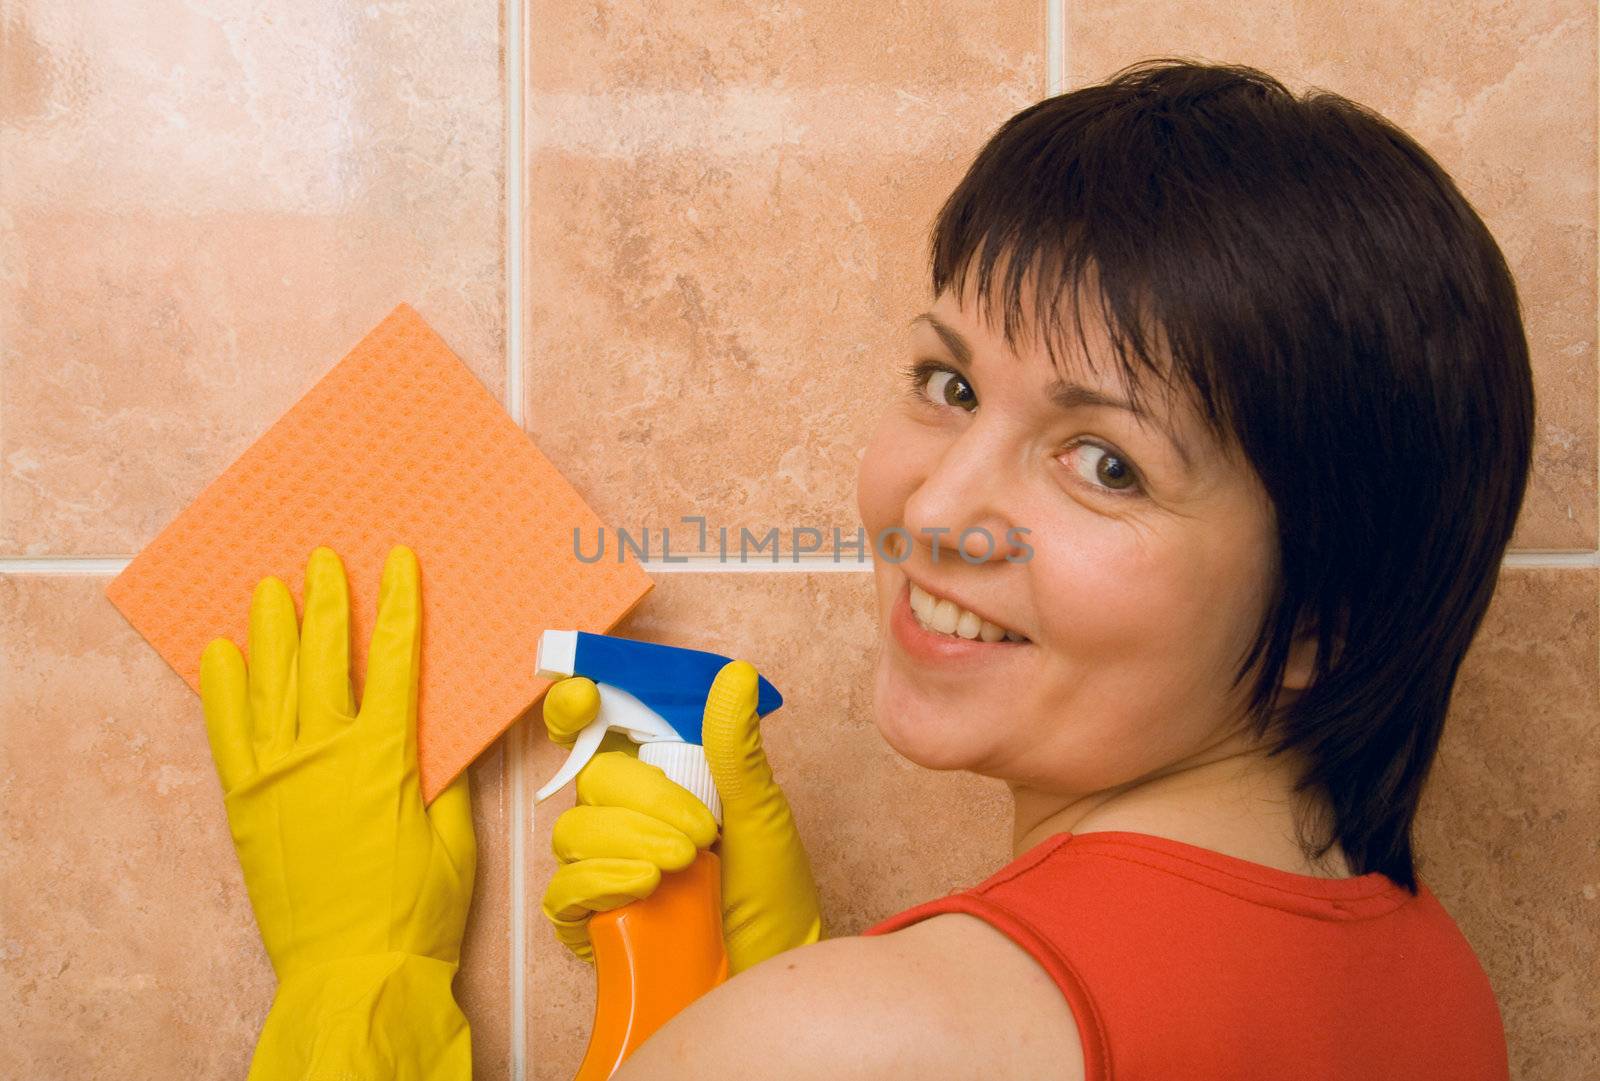 Housewife cleans a tile by Kriblikrabli